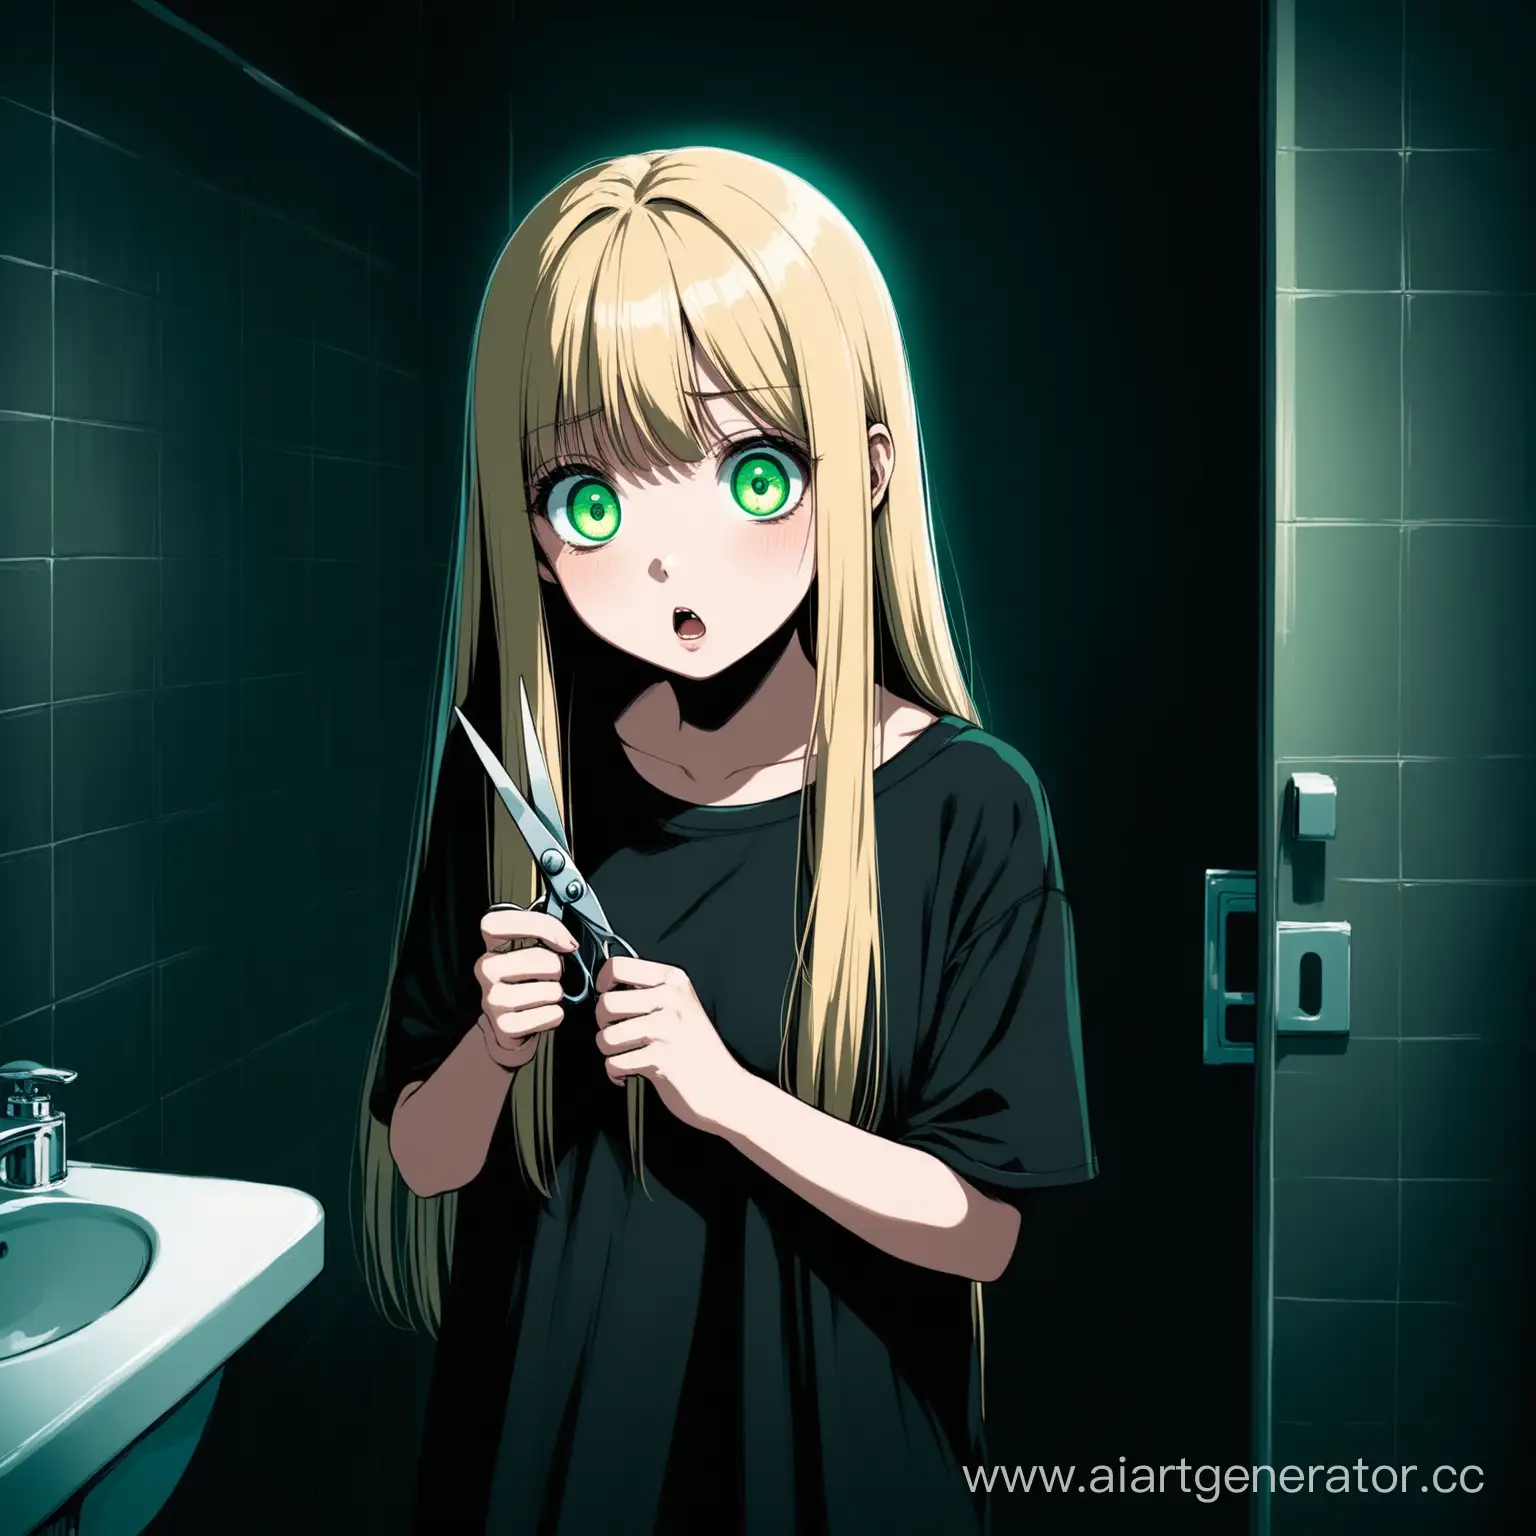 Anxious-Girl-with-Scissors-in-Dimly-Lit-Bathroom